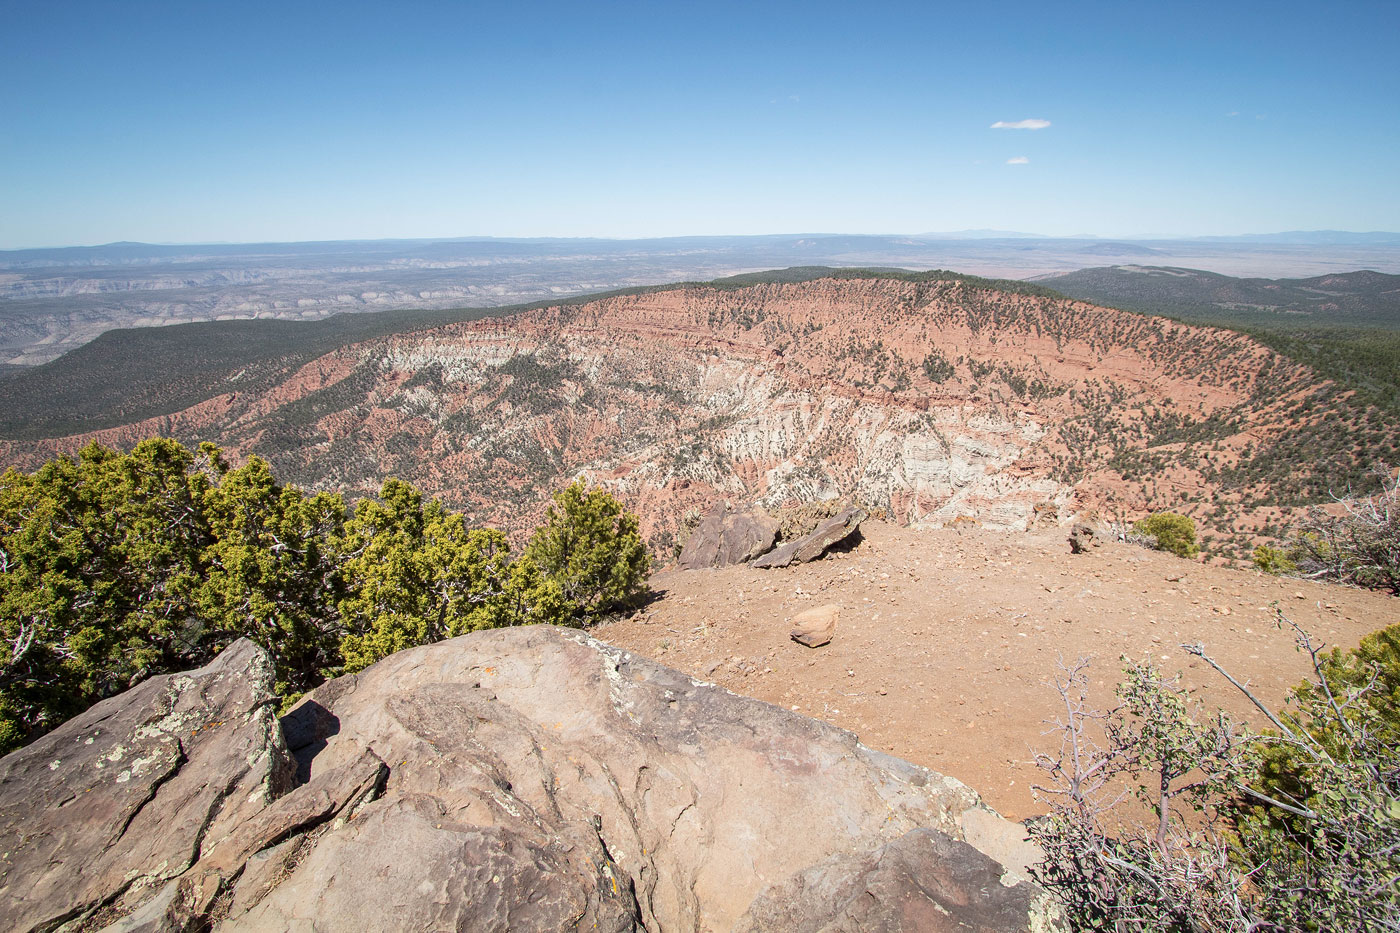 Hike Mount Logan in Grand Canyon-Parashant National Monument, Arizona - Stav is Lost